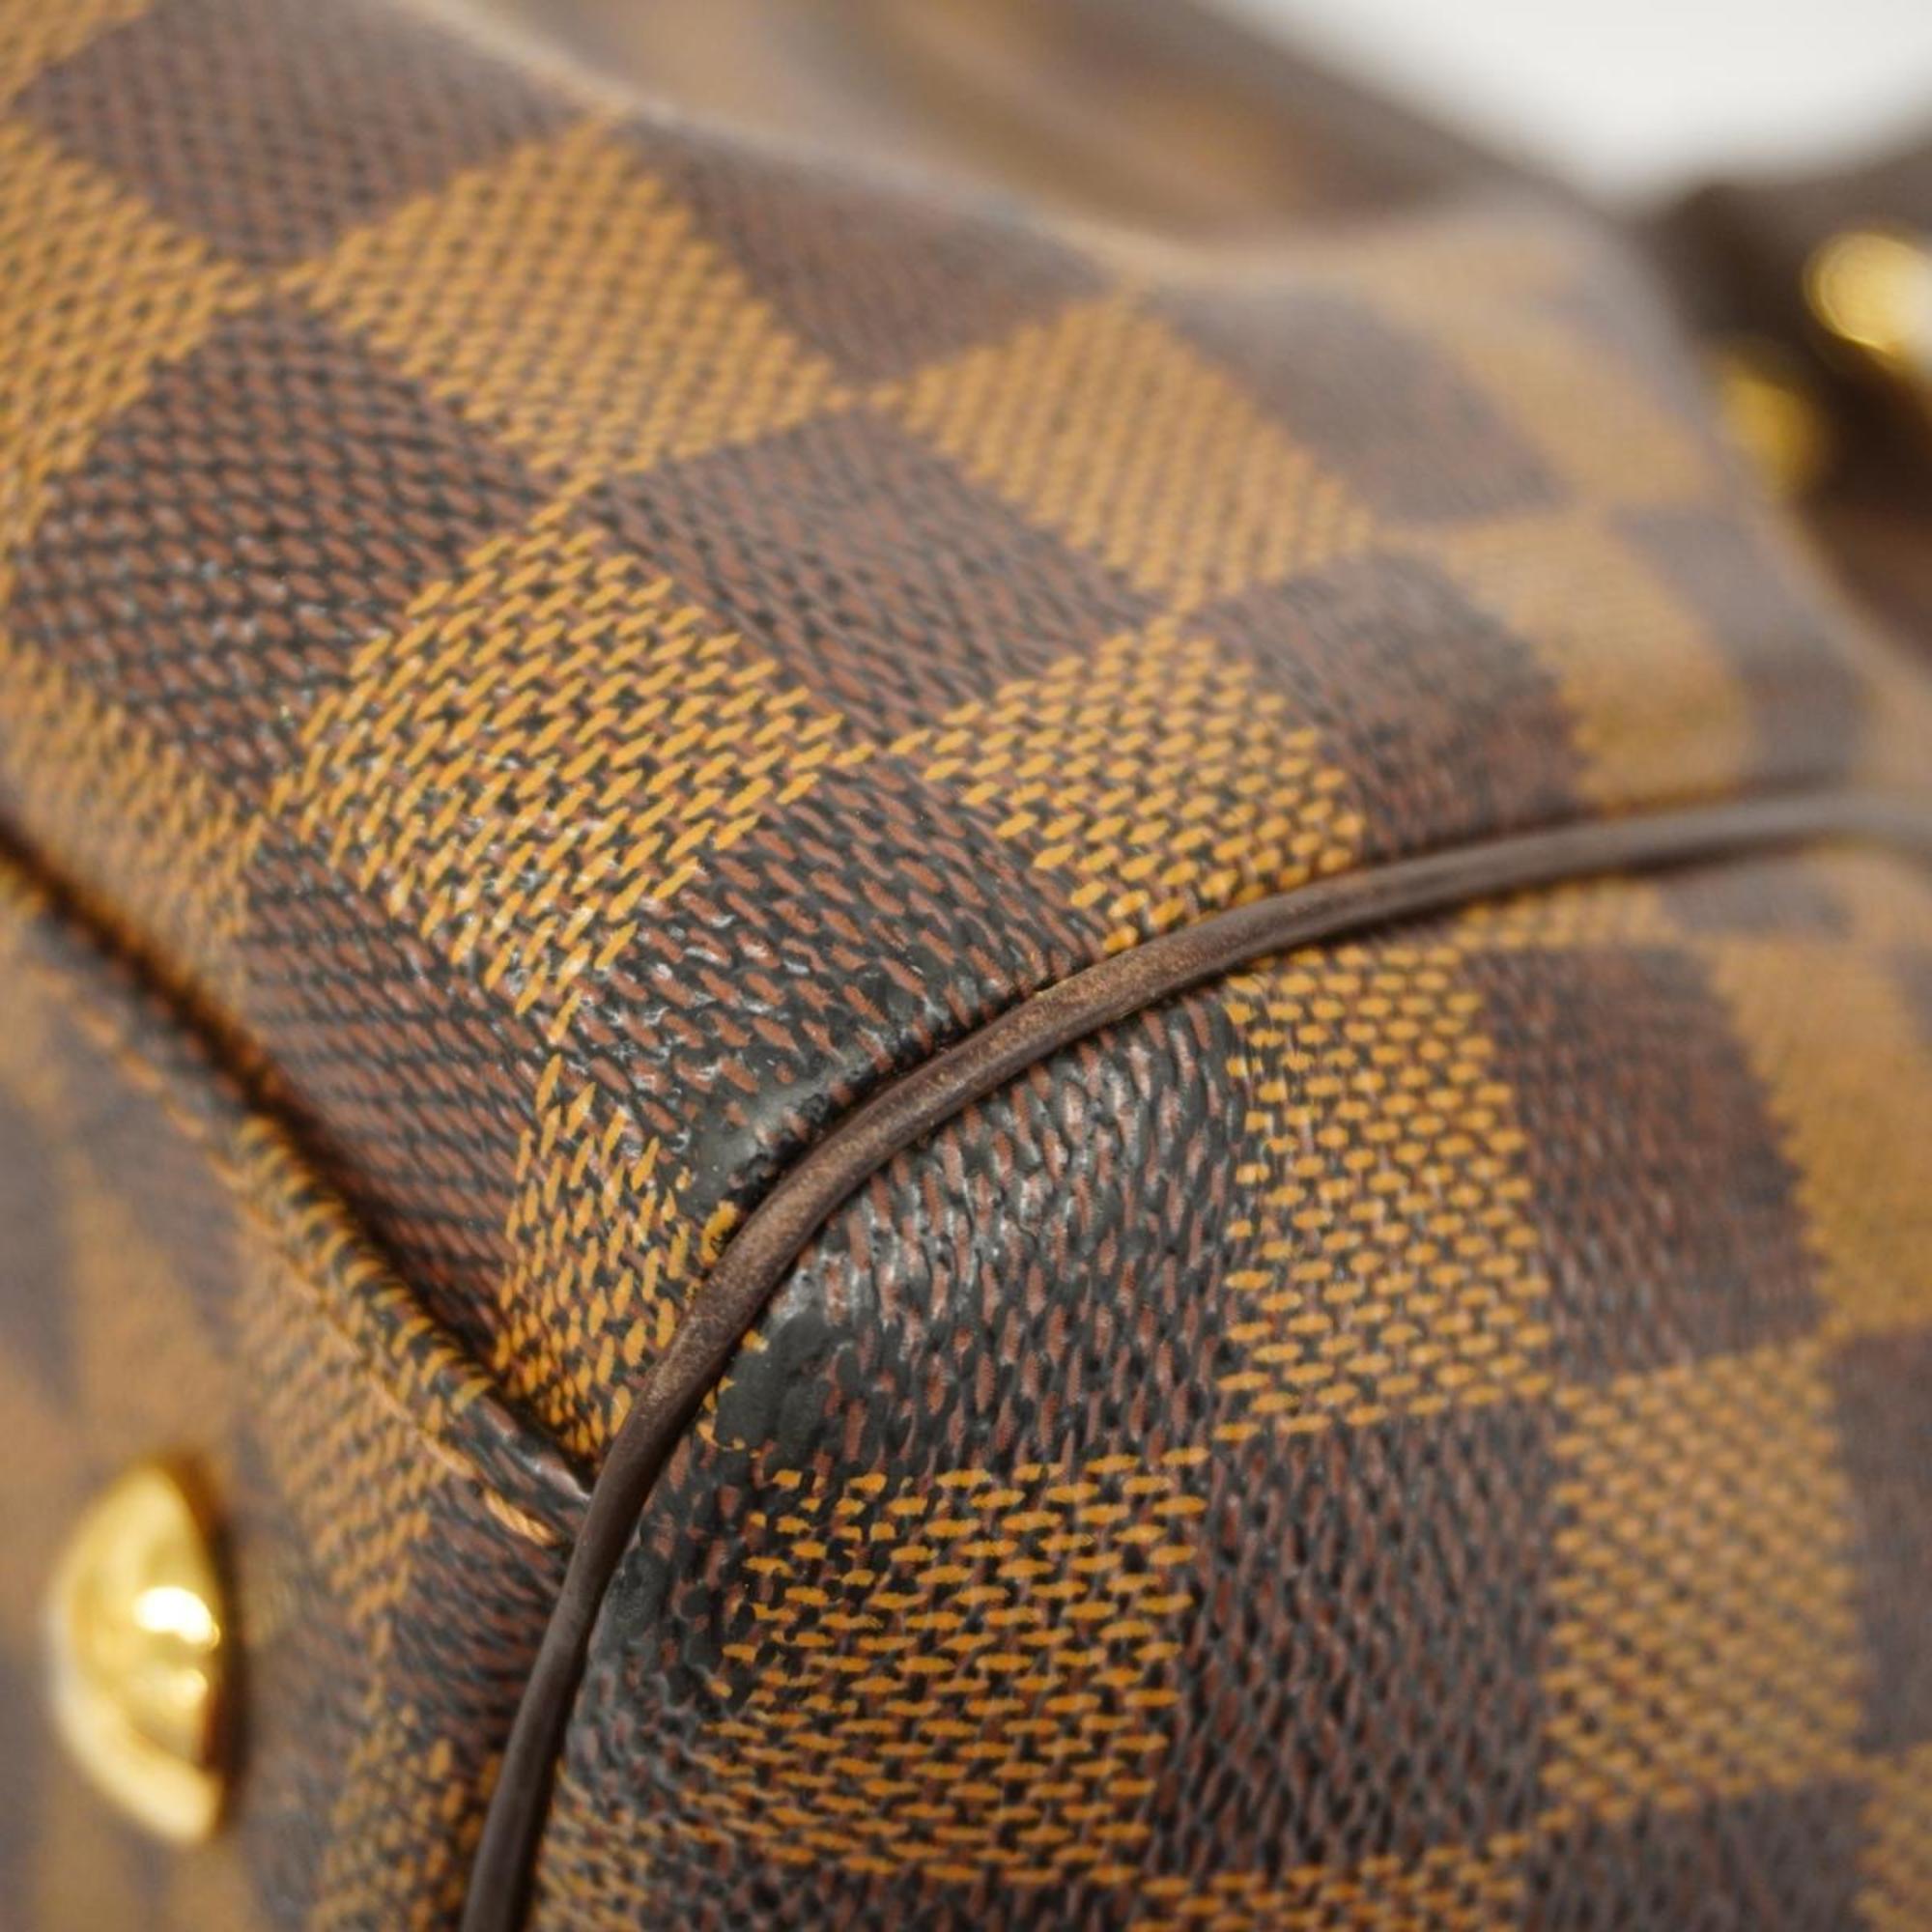 Louis Vuitton Handbag Damier Trevi PM N51997 Ebene Ladies